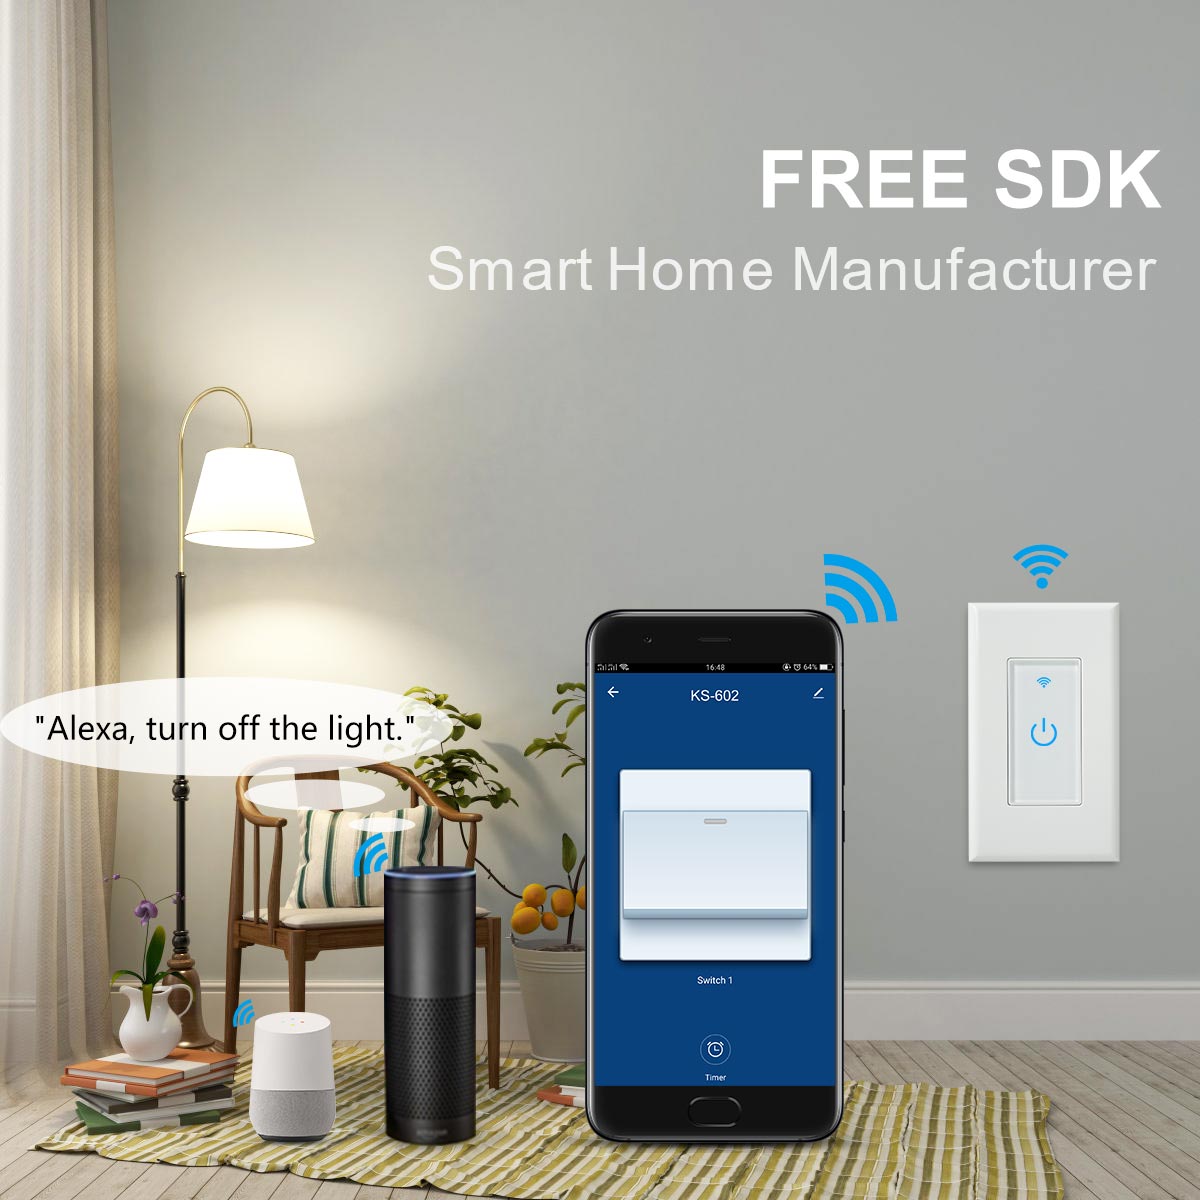 Five reasons you need Hidintech Factory Smart Home